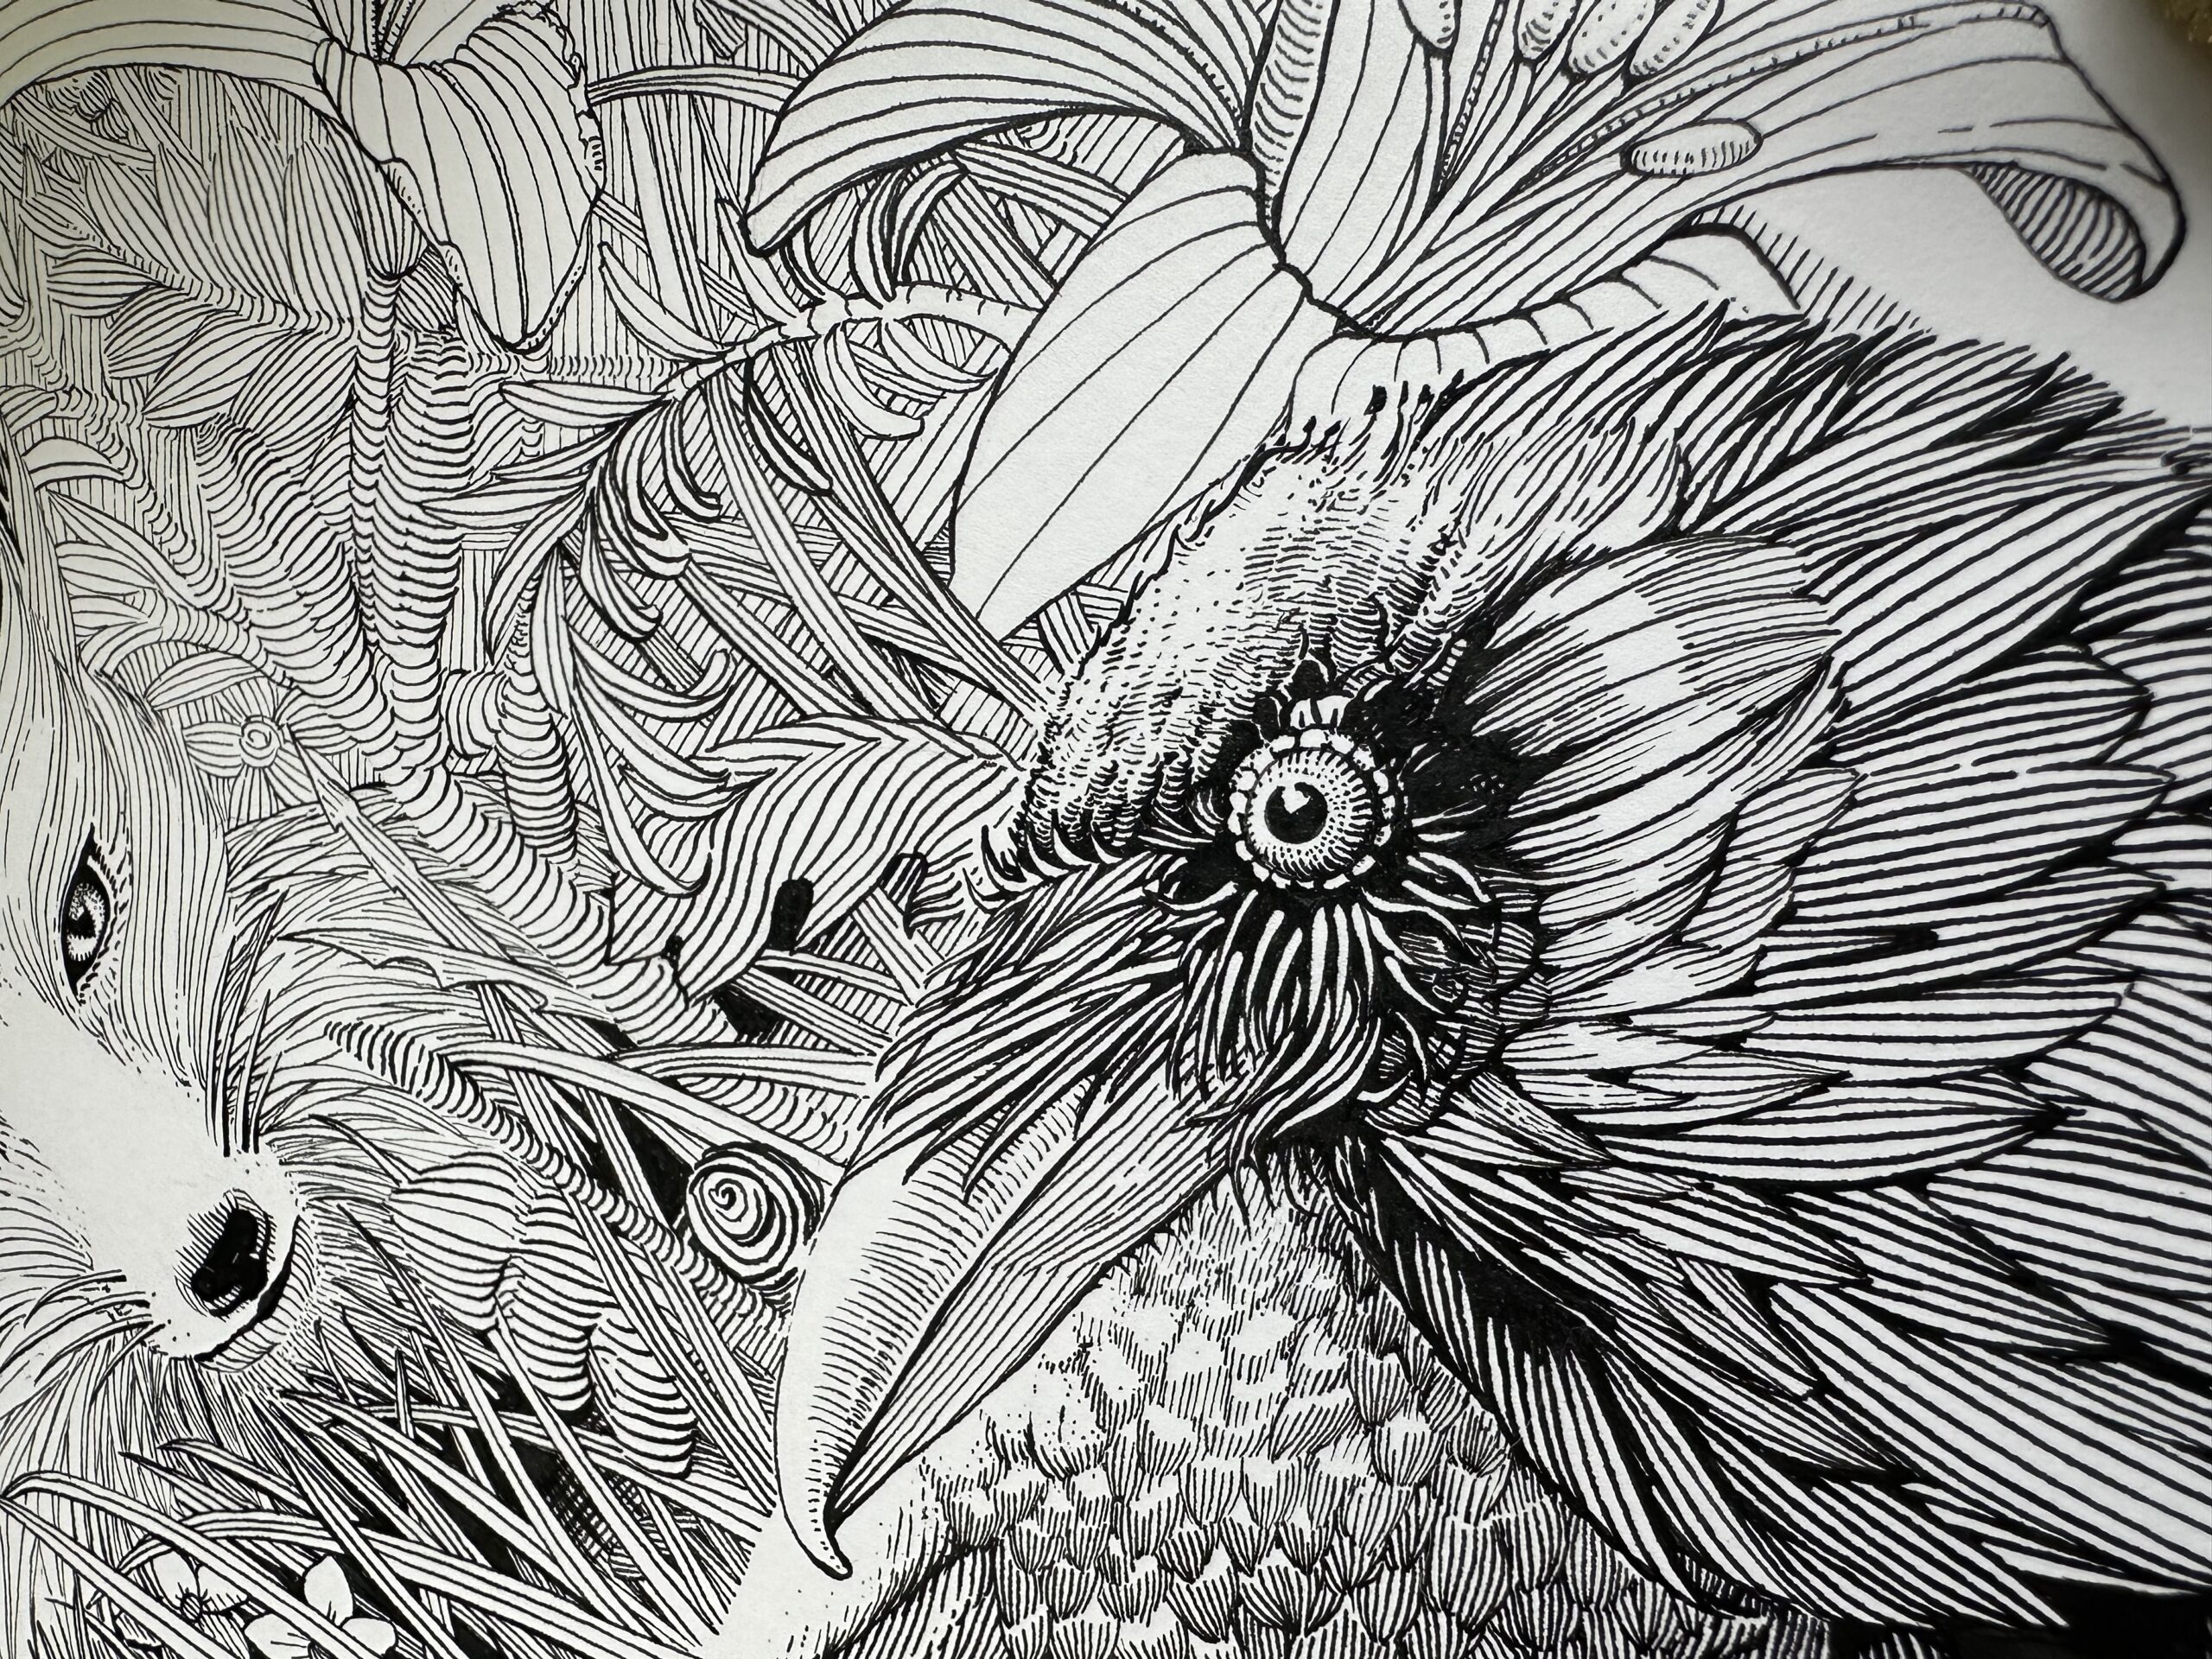 Line illustration of a raven's head